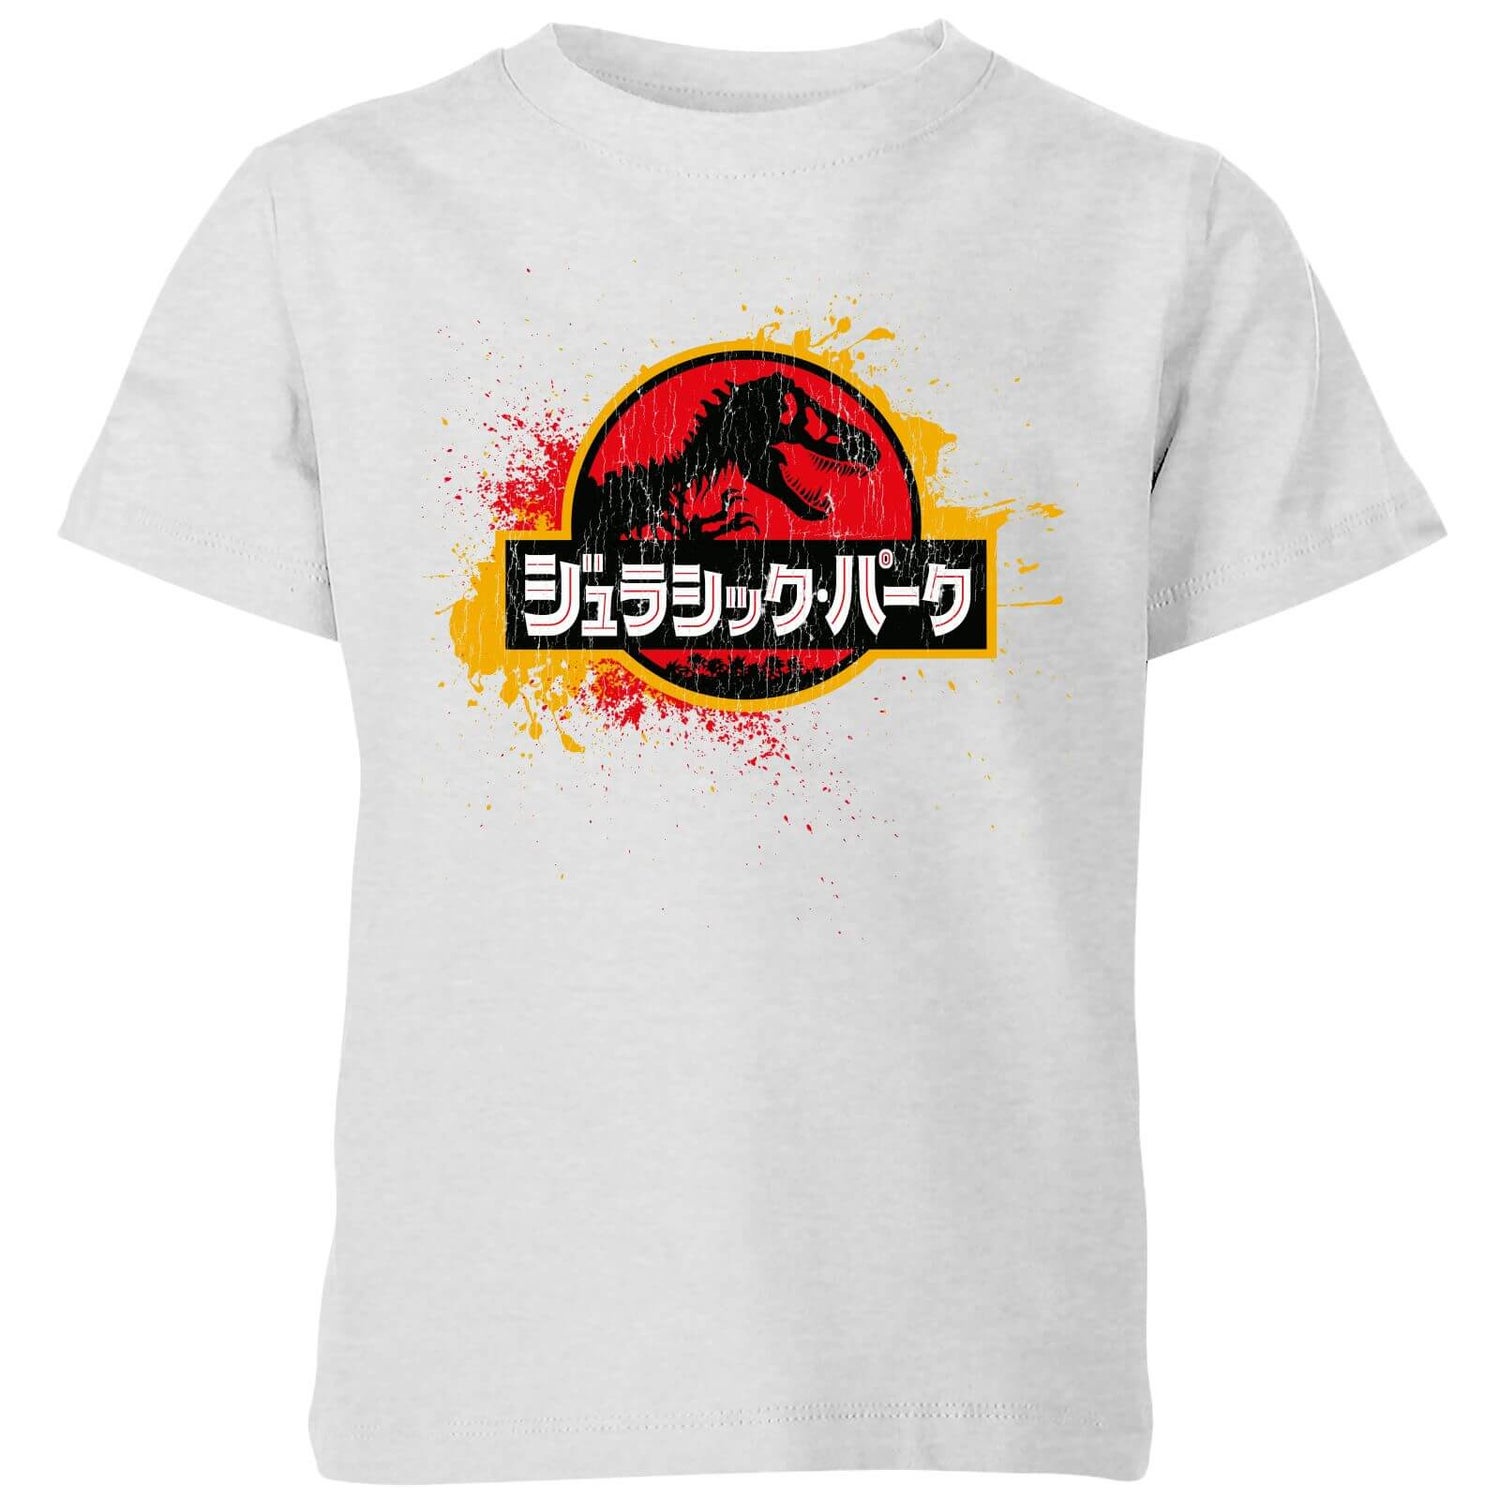 Jurassic Park Kids' T-Shirt - Grey